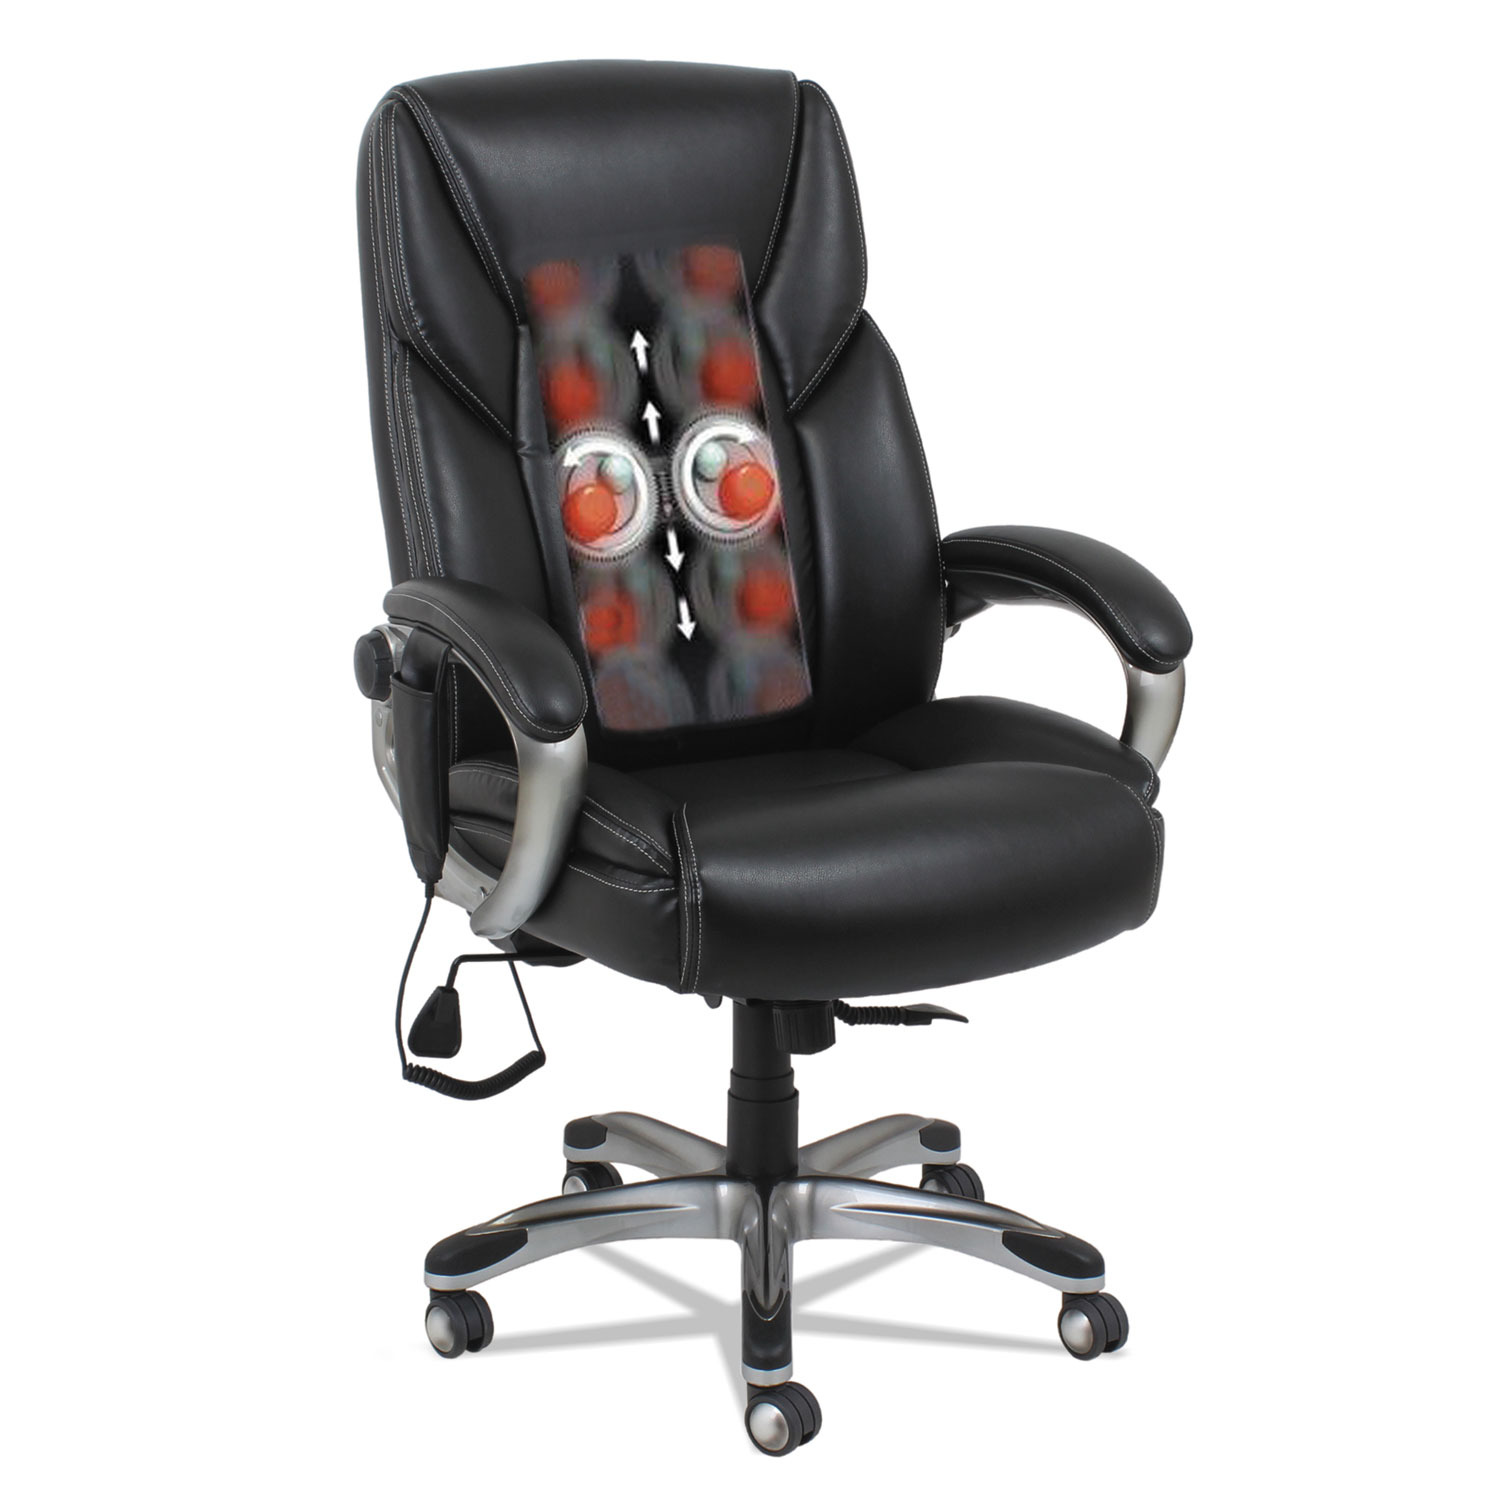 Shiatsu Massage Chair, Supports up to 275 lbs., Black Seat/Black Back